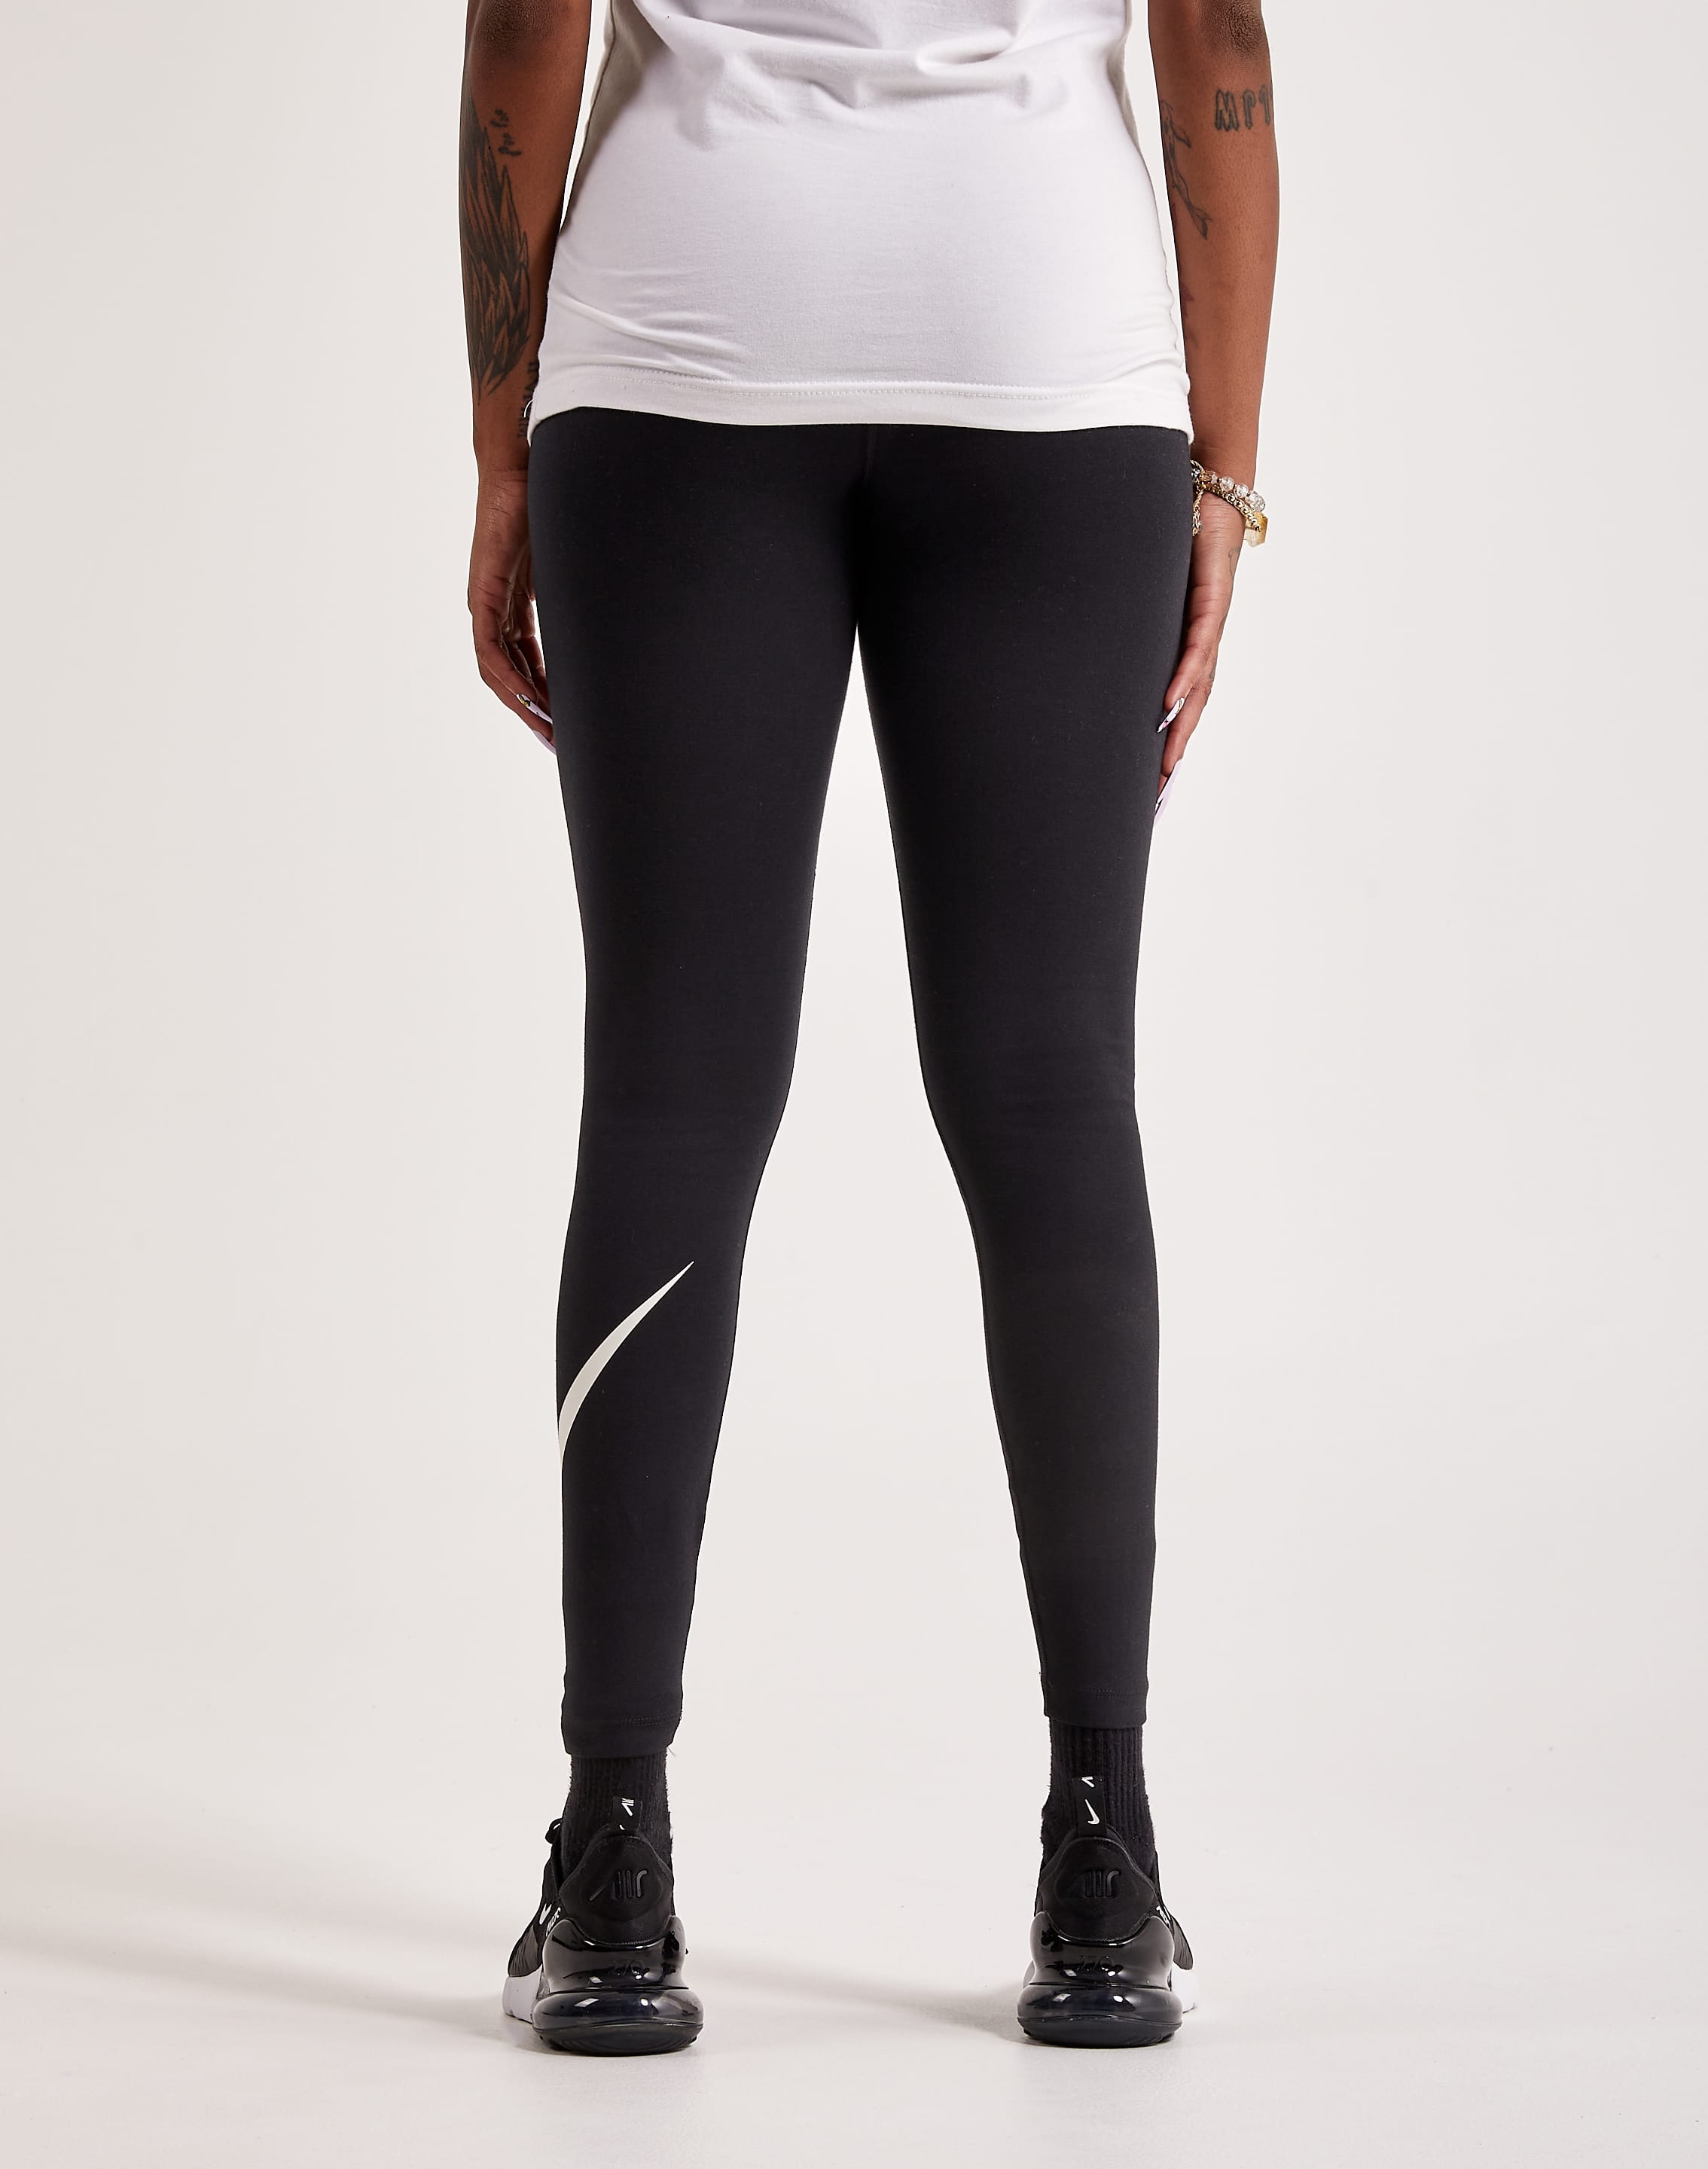 NWT Nike Dri-FIT Midrise Camo Leggings Plus Size 1X | eBay